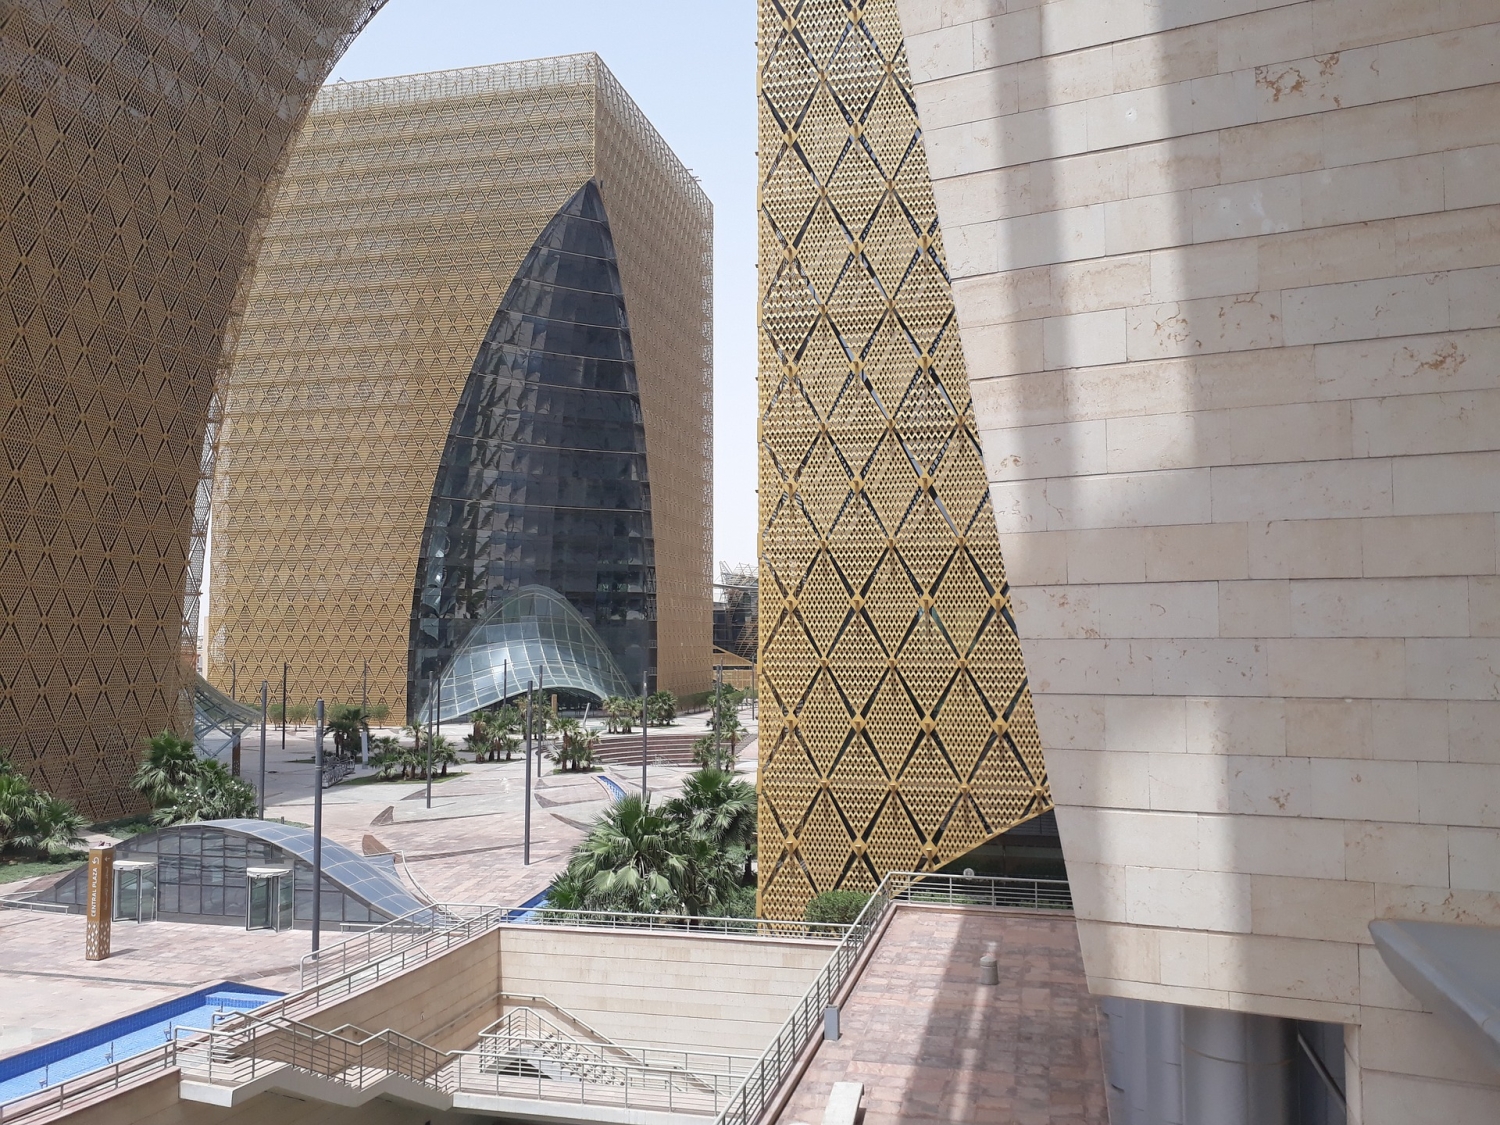 Saudi Arabia wins an award in Best Pavilion category at Expo 2020 Dubai